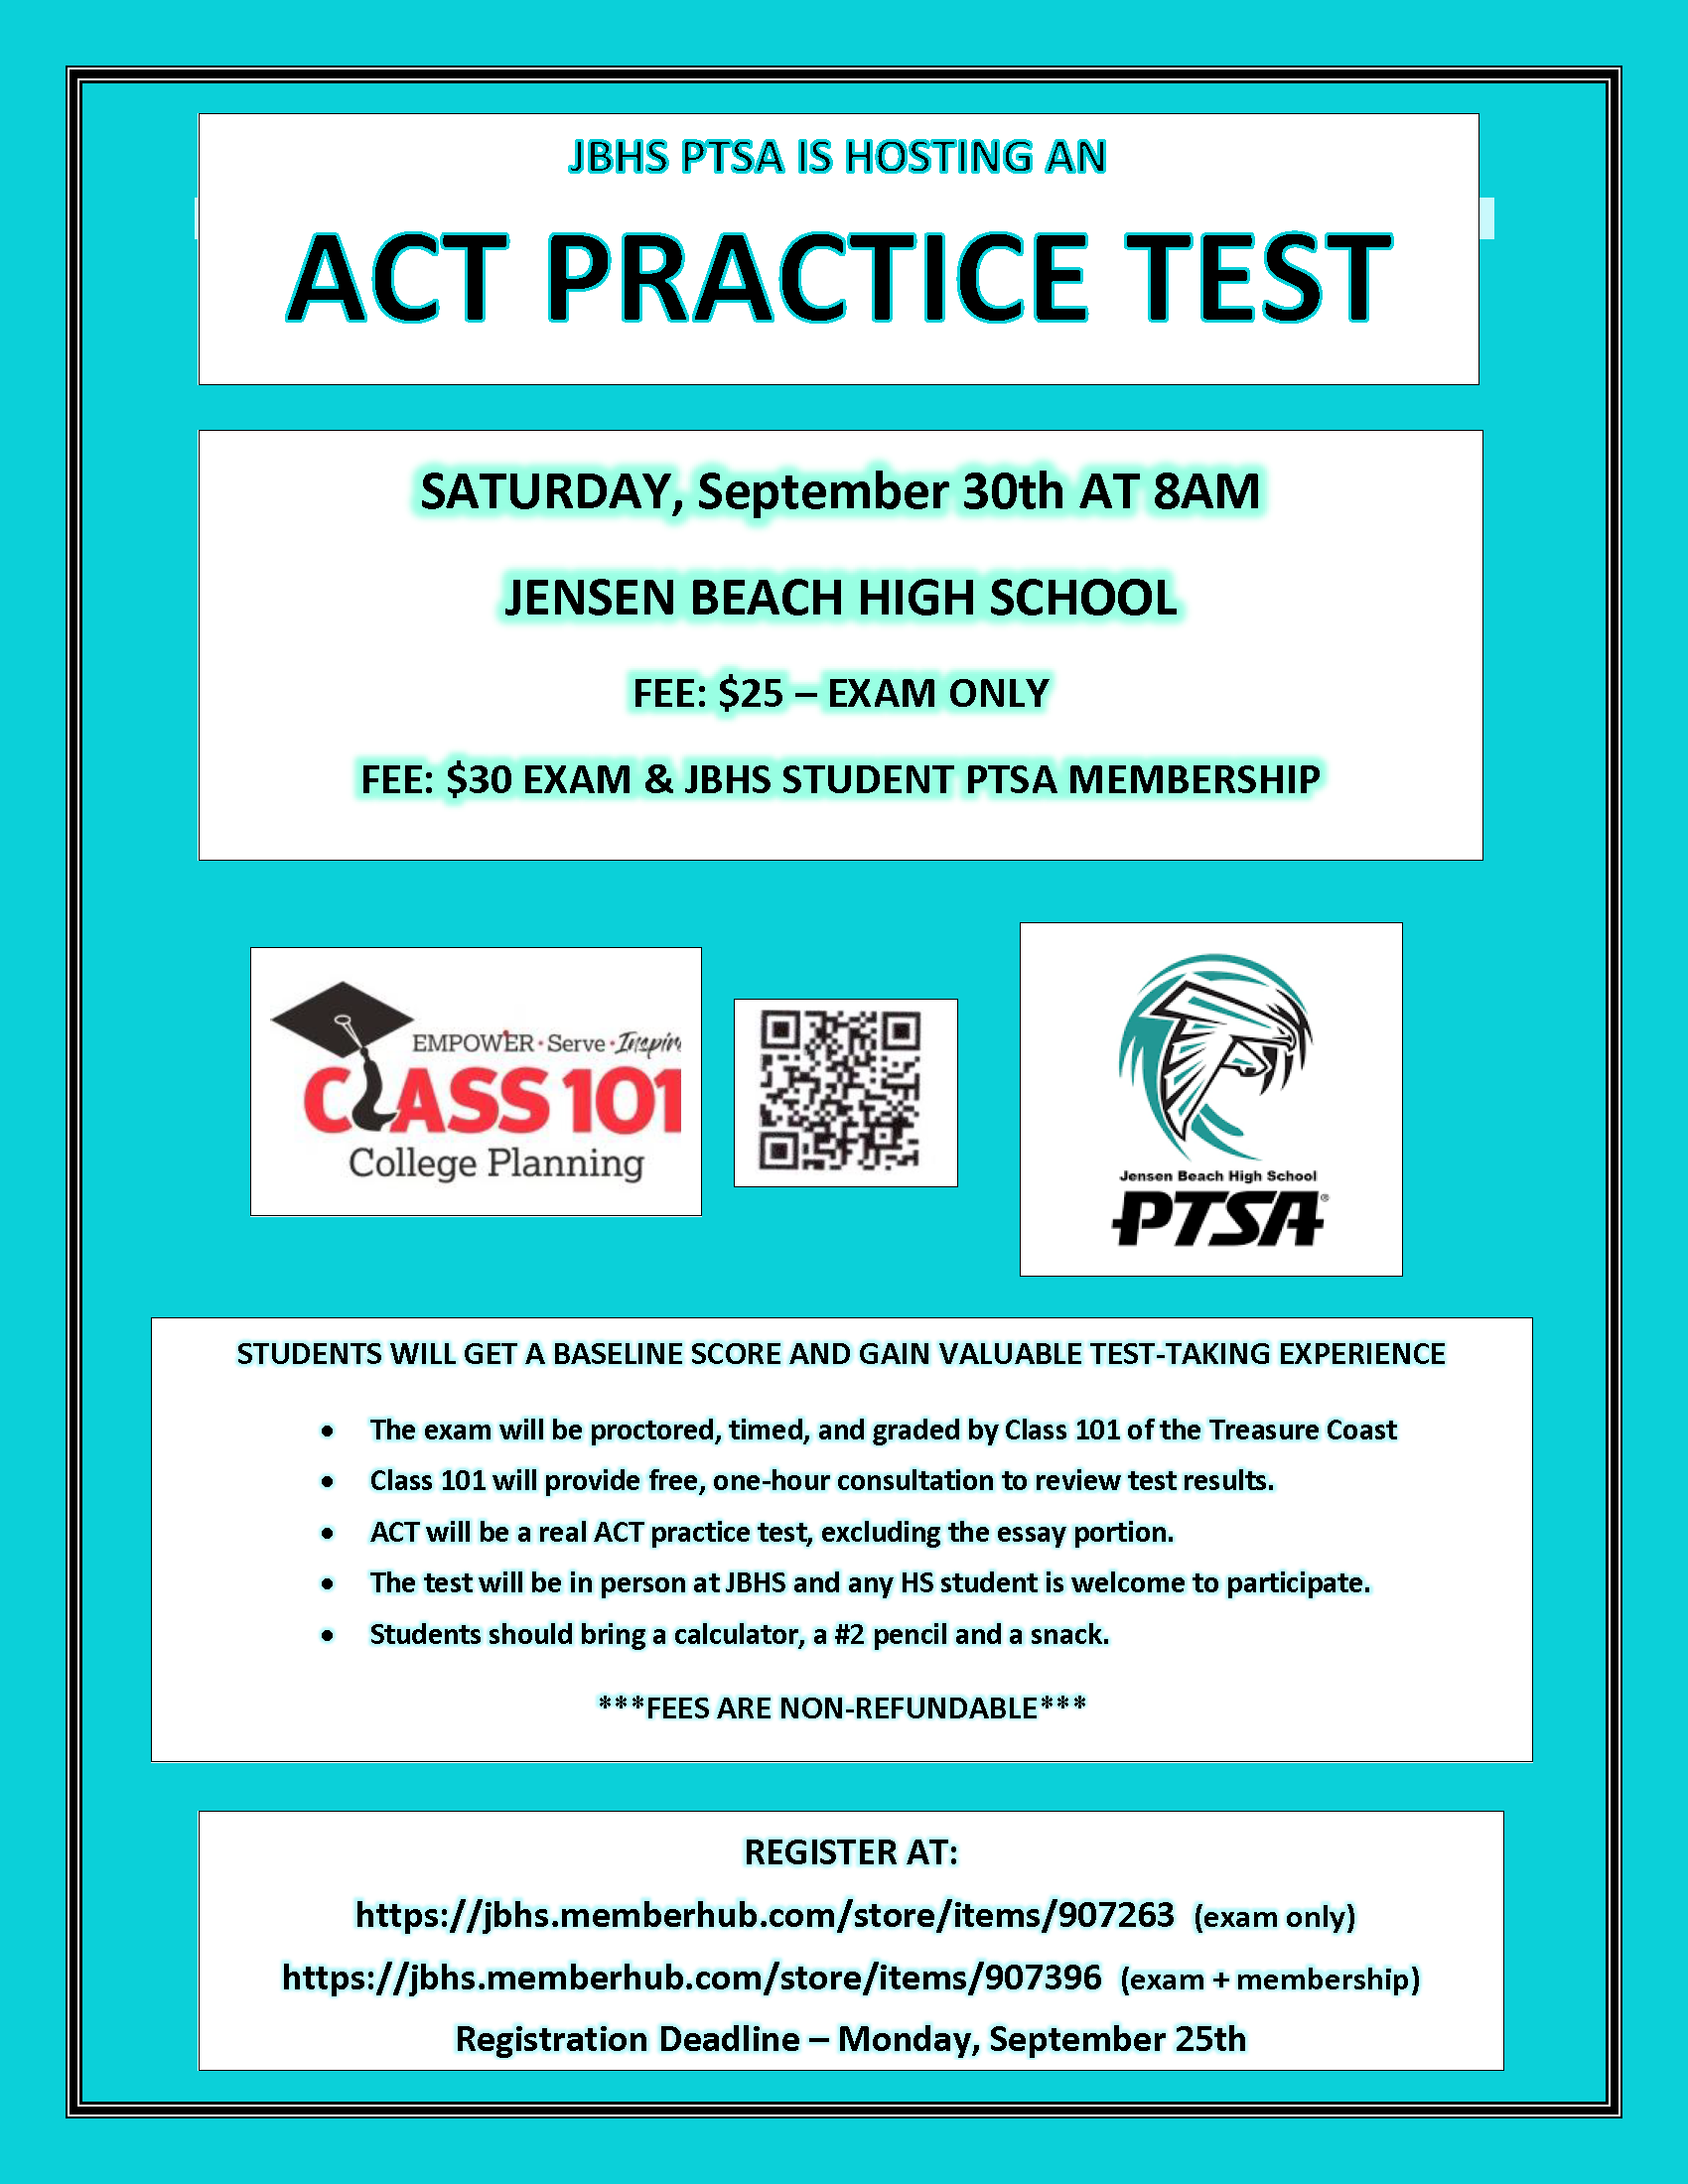 Practice ACT at Jensen Beach High School